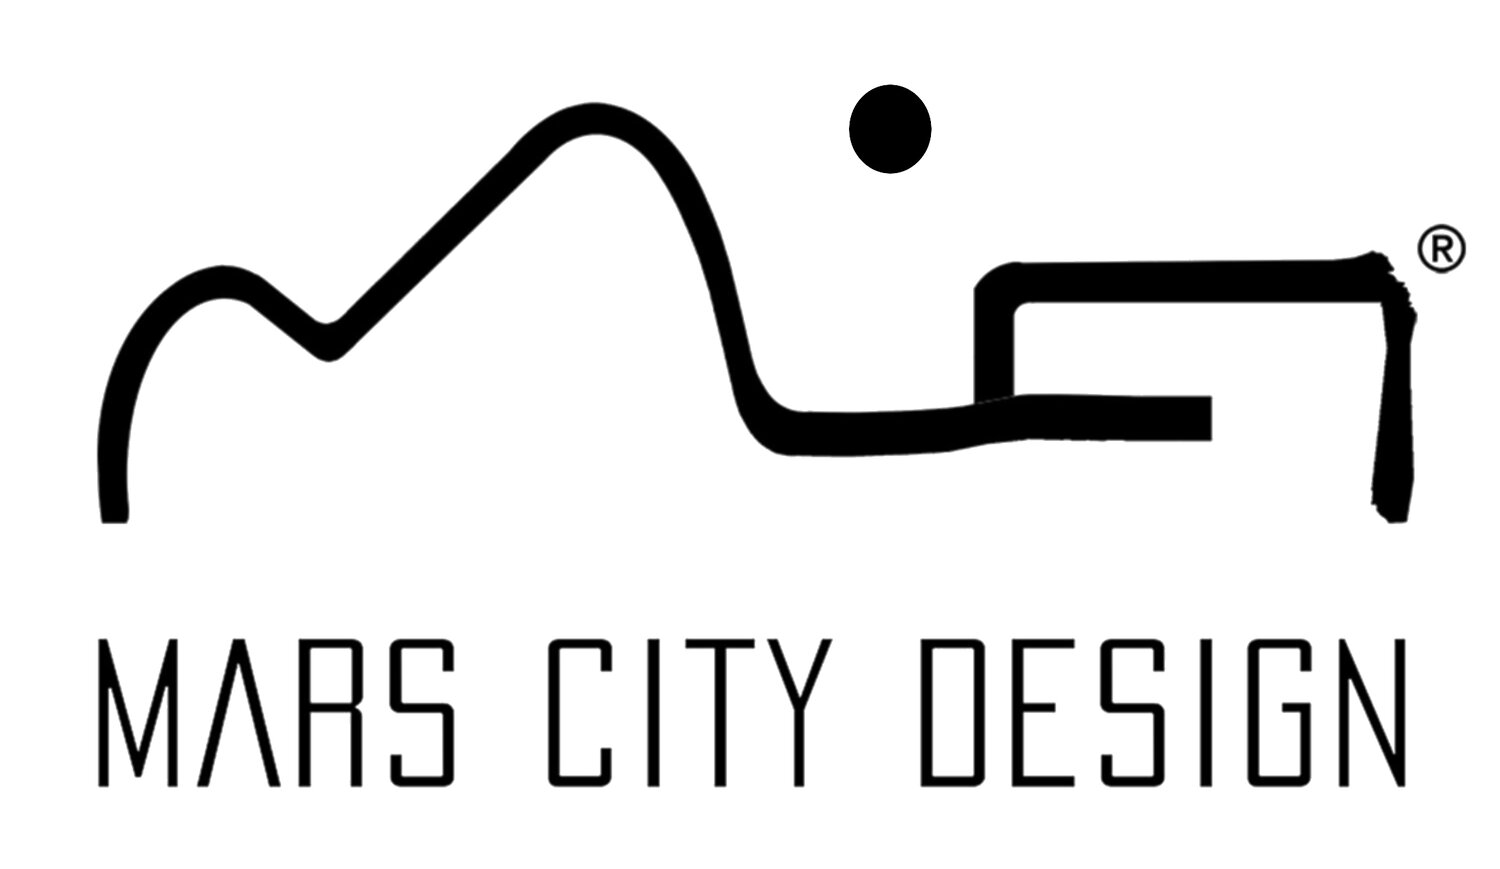 MARS CITY DESIGN